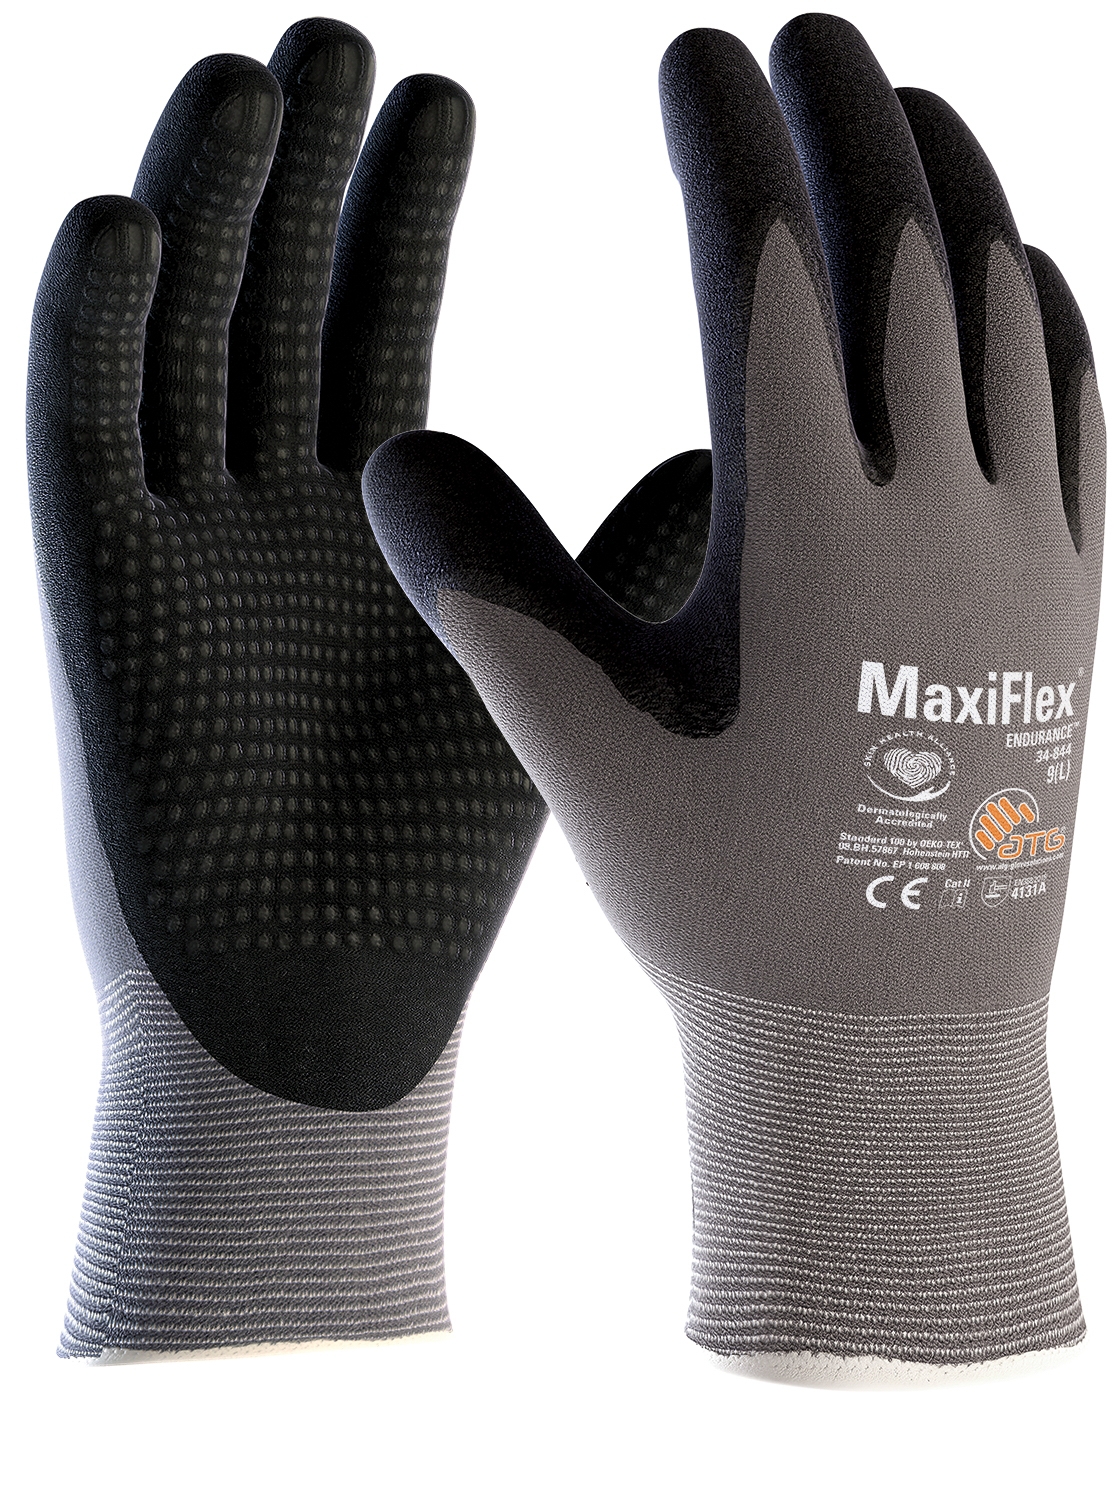 ATG® Nylon-Strickhandschuhe MaxiFlex® Endurance™ (34-844) grau/schwarz | Gamaschen